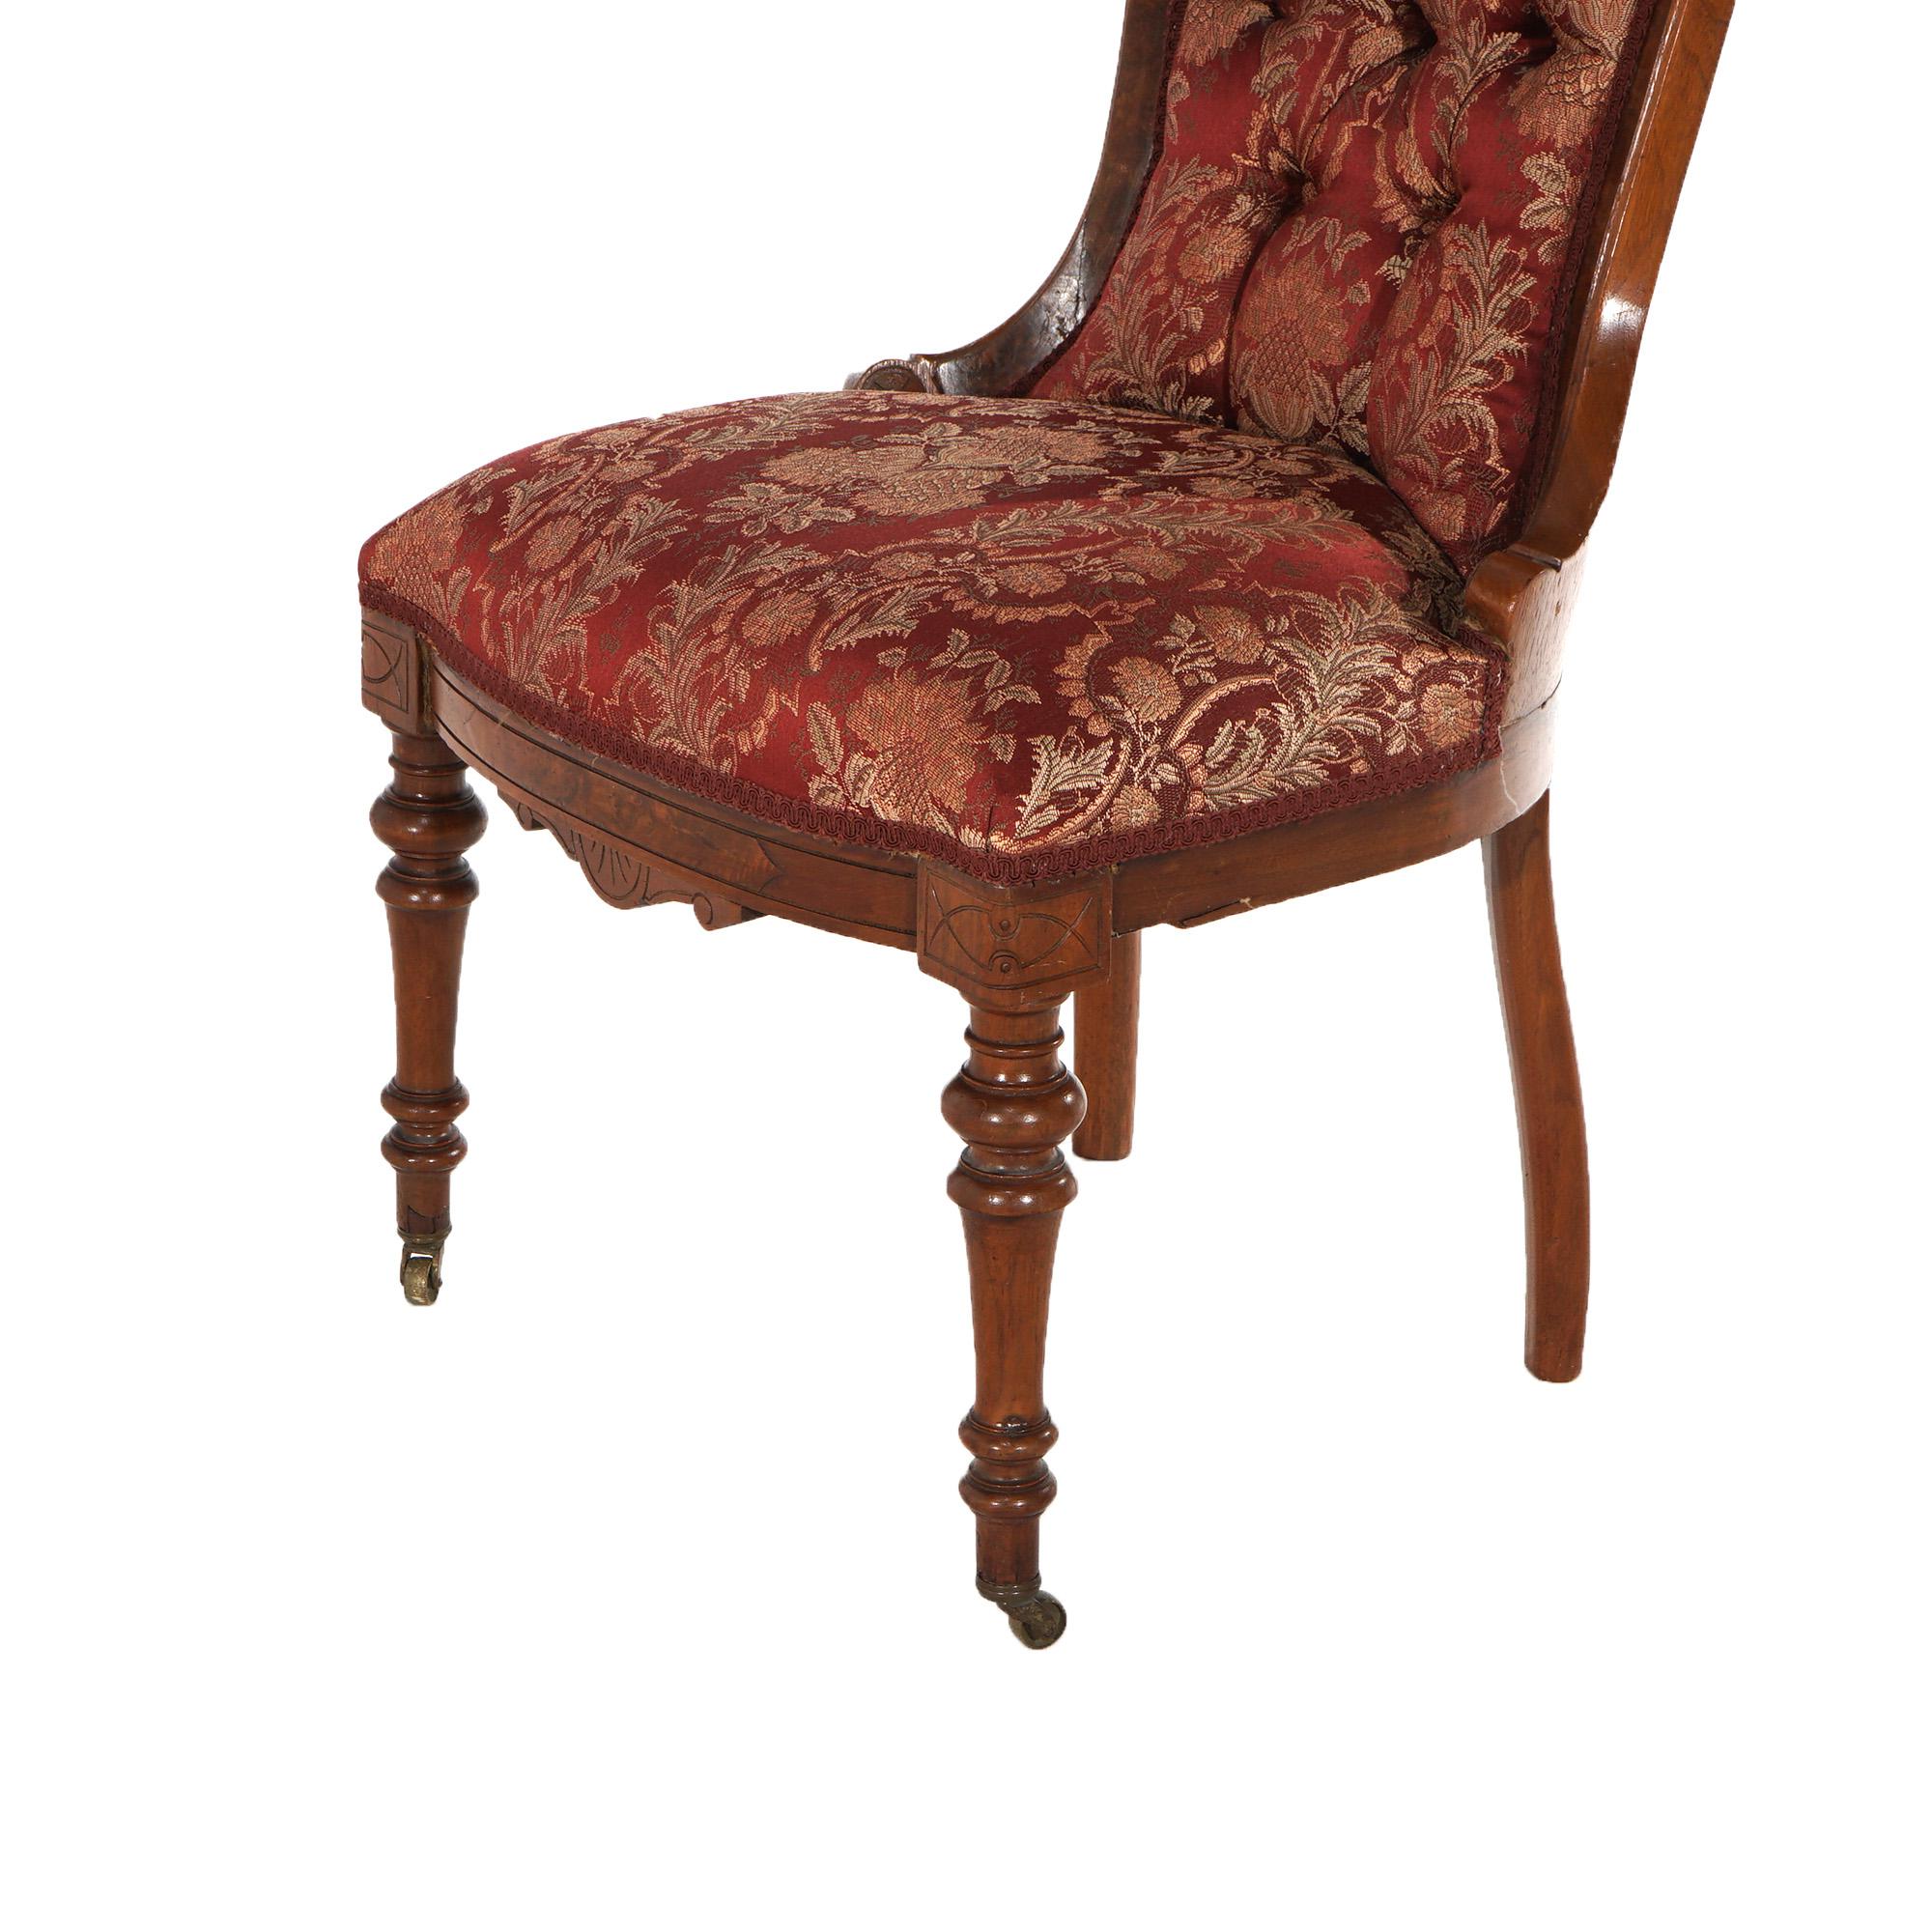 Antique John Jelliff Renaissance Revival Carved Walnut Side Chair C1880 For Sale 8